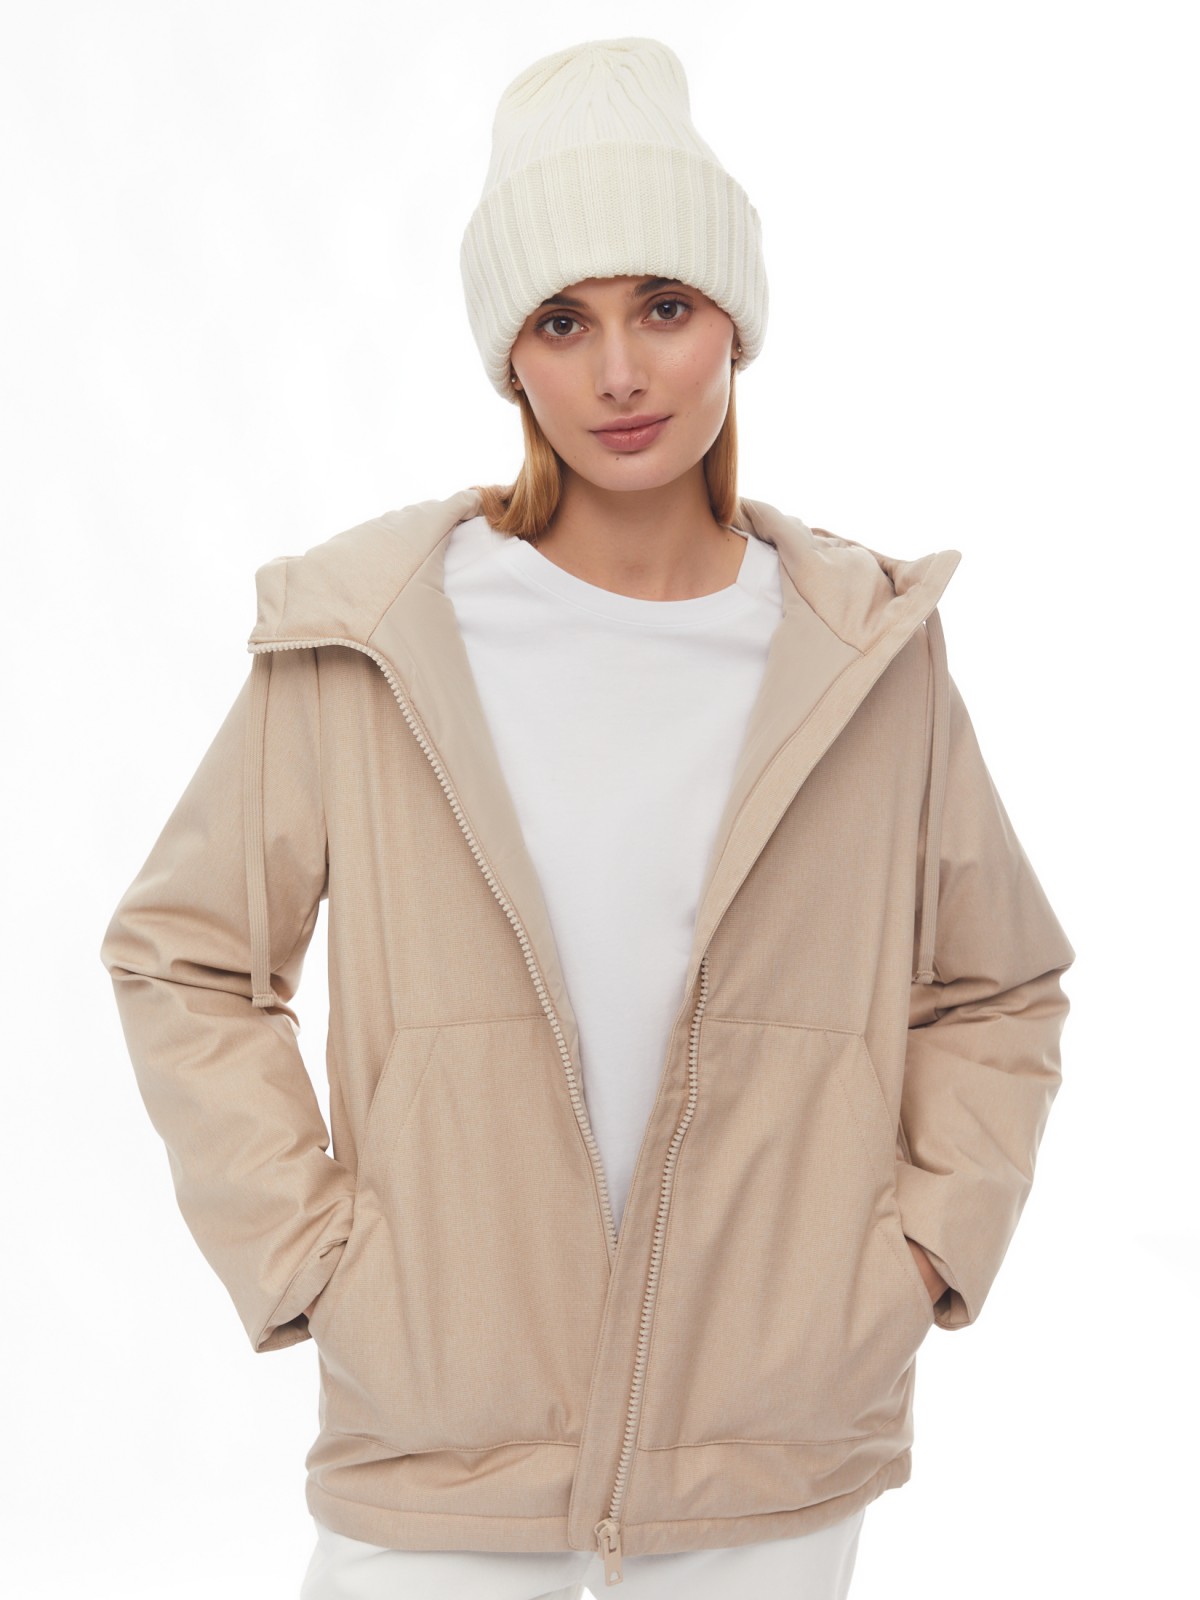 Утеплённая куртка-парка на молнии с капюшоном zolla 024125102124, цвет молоко, размер XS - фото 1